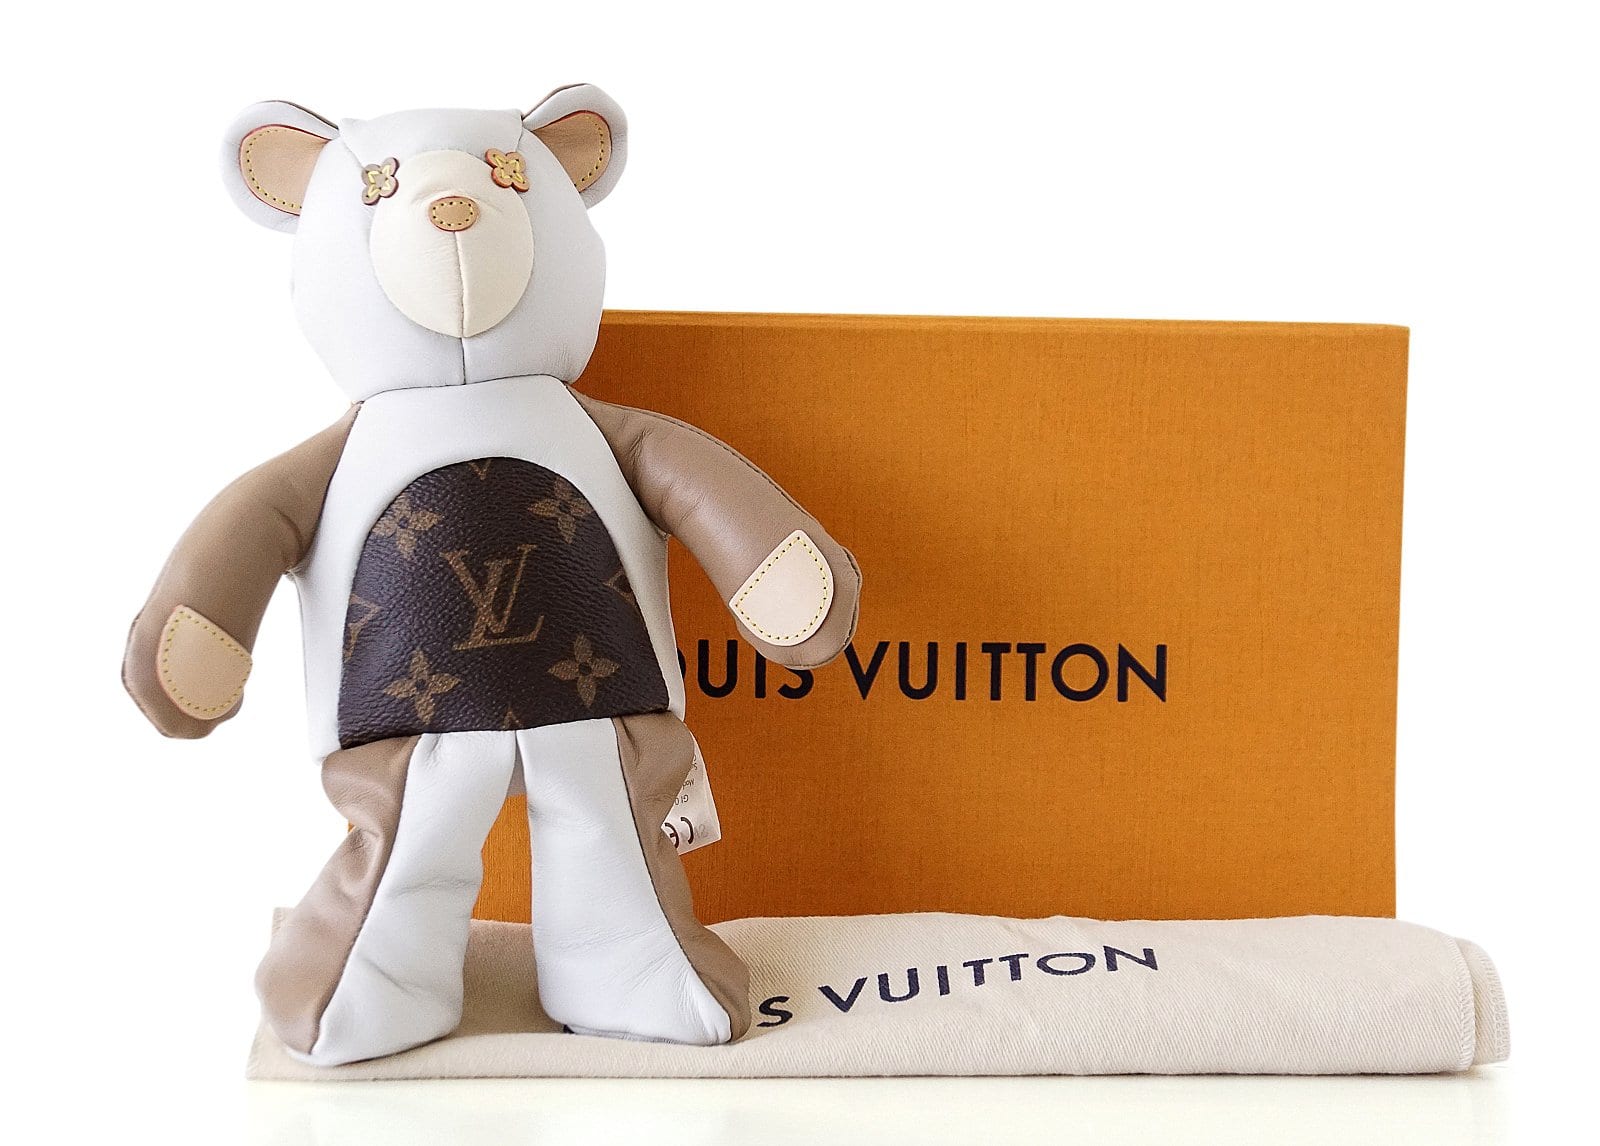 LOUIS VUITTON Monogram Teddy Bear Dou Dou Dudu Limited 026 / 500 M99000